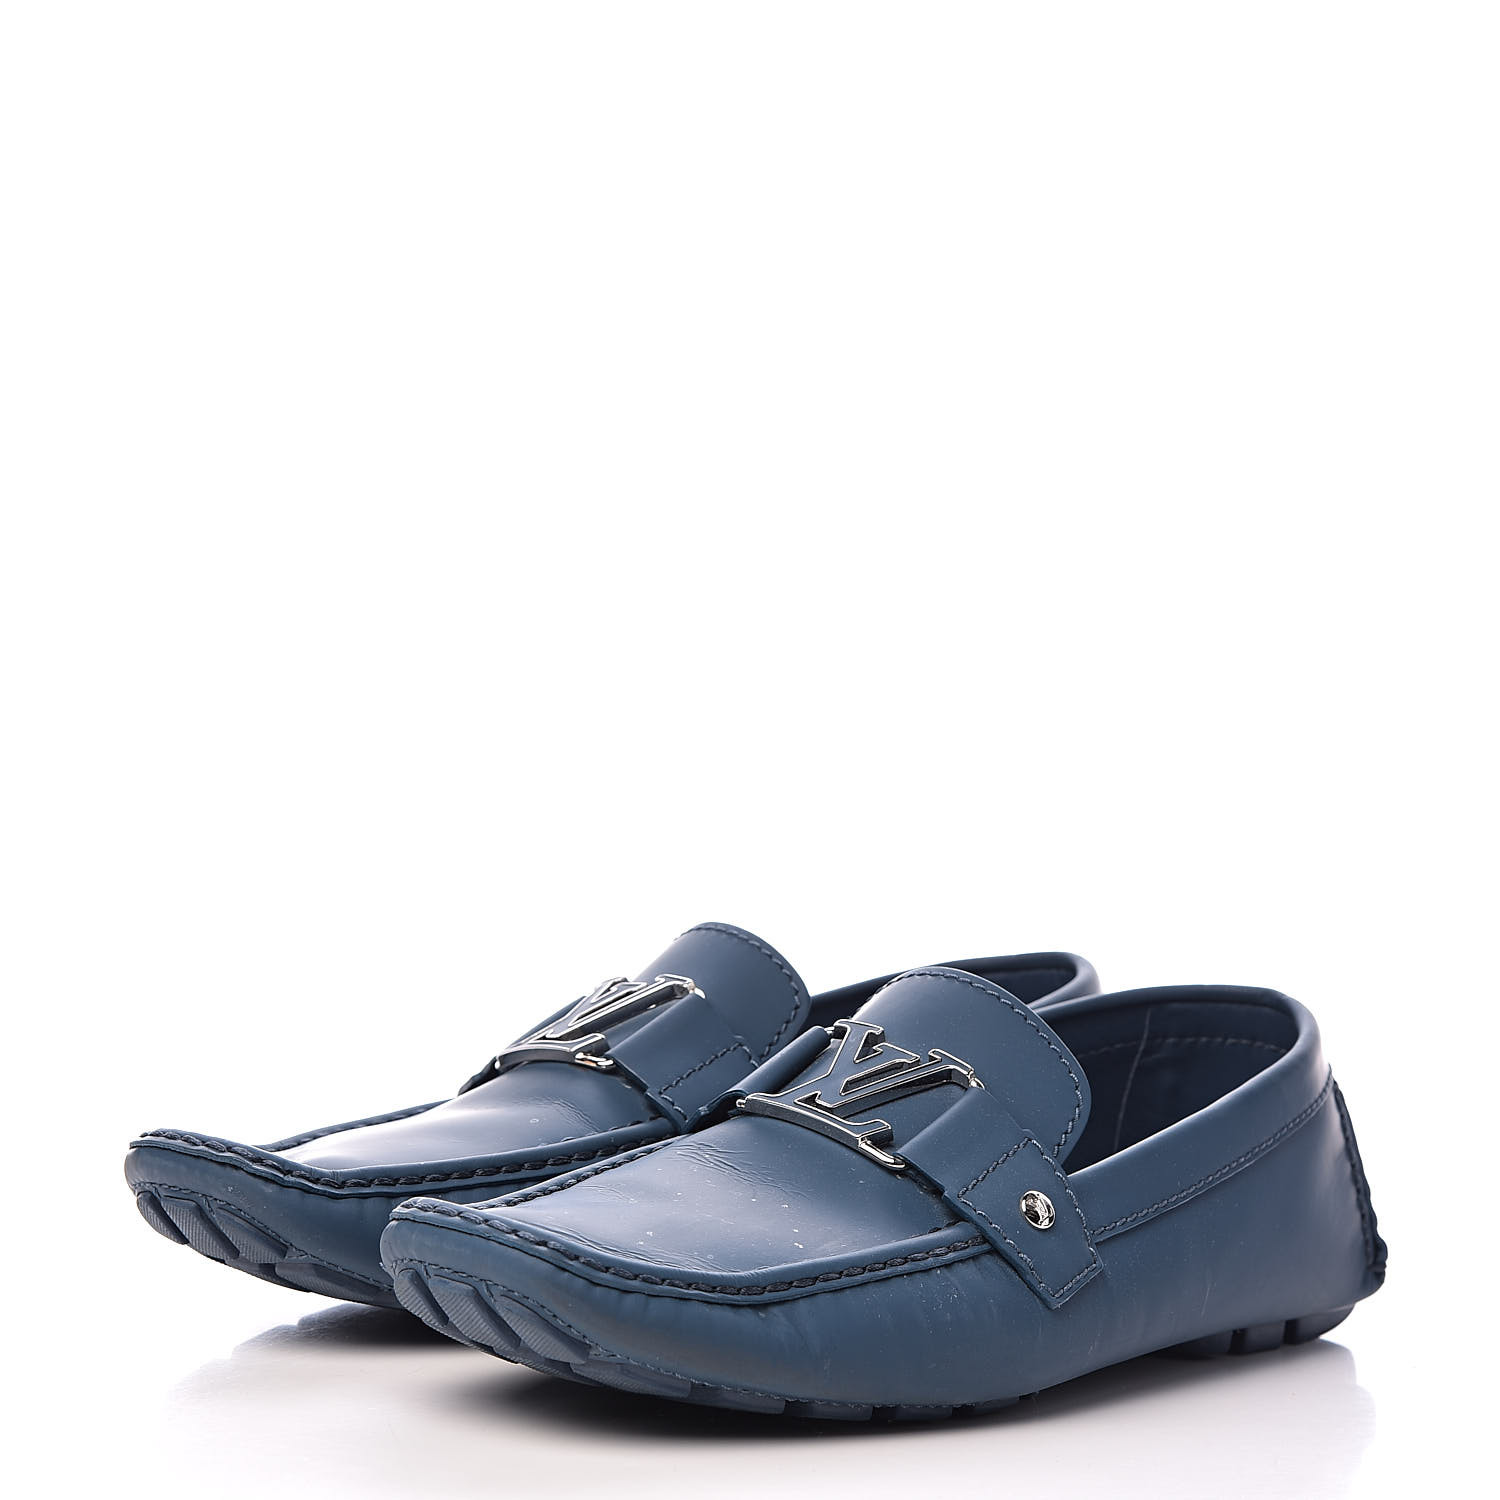 LOUIS VUITTON Calfskin Mens Monte Carlo Car Shoe Moccasin Loafers 9.5 Blue 506702